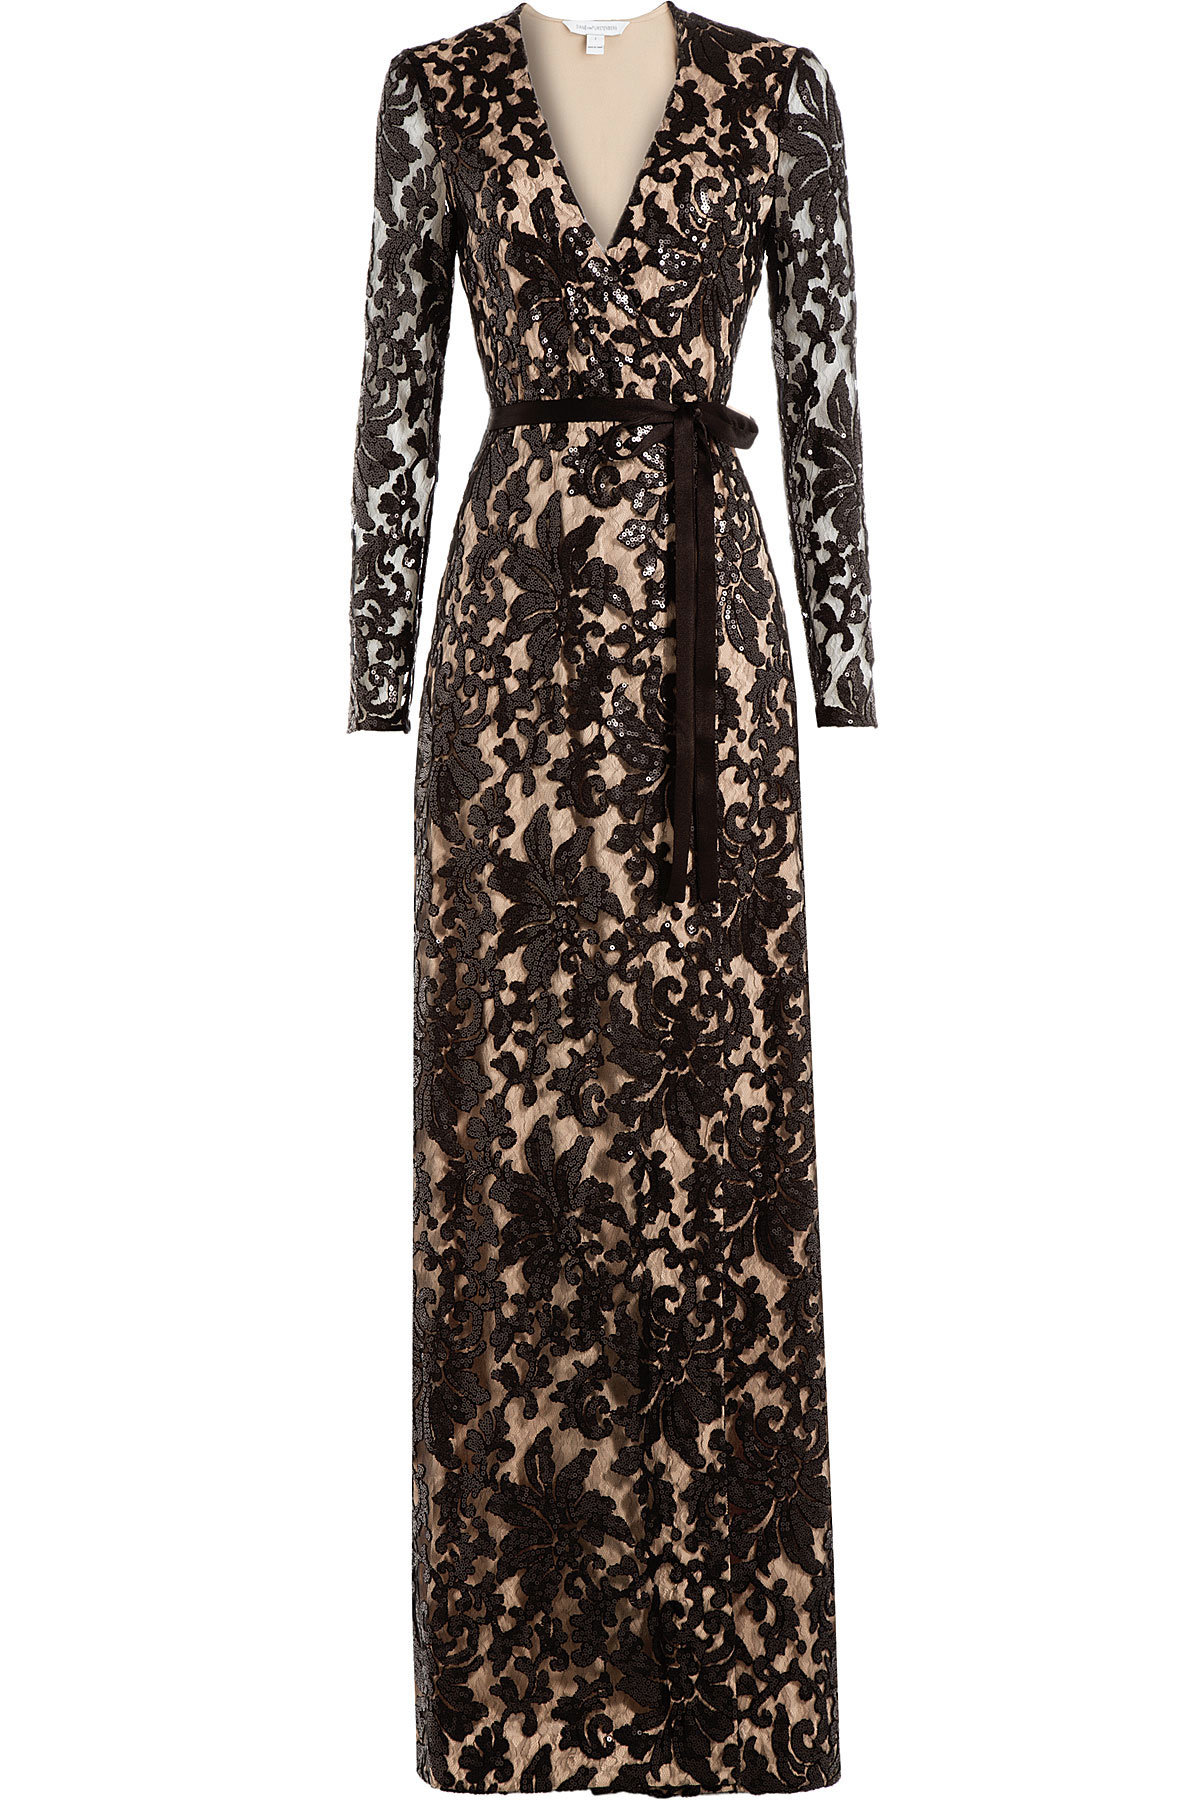 Diane von Furstenberg - Sequin Embellished Floor-Length Gown with Lace